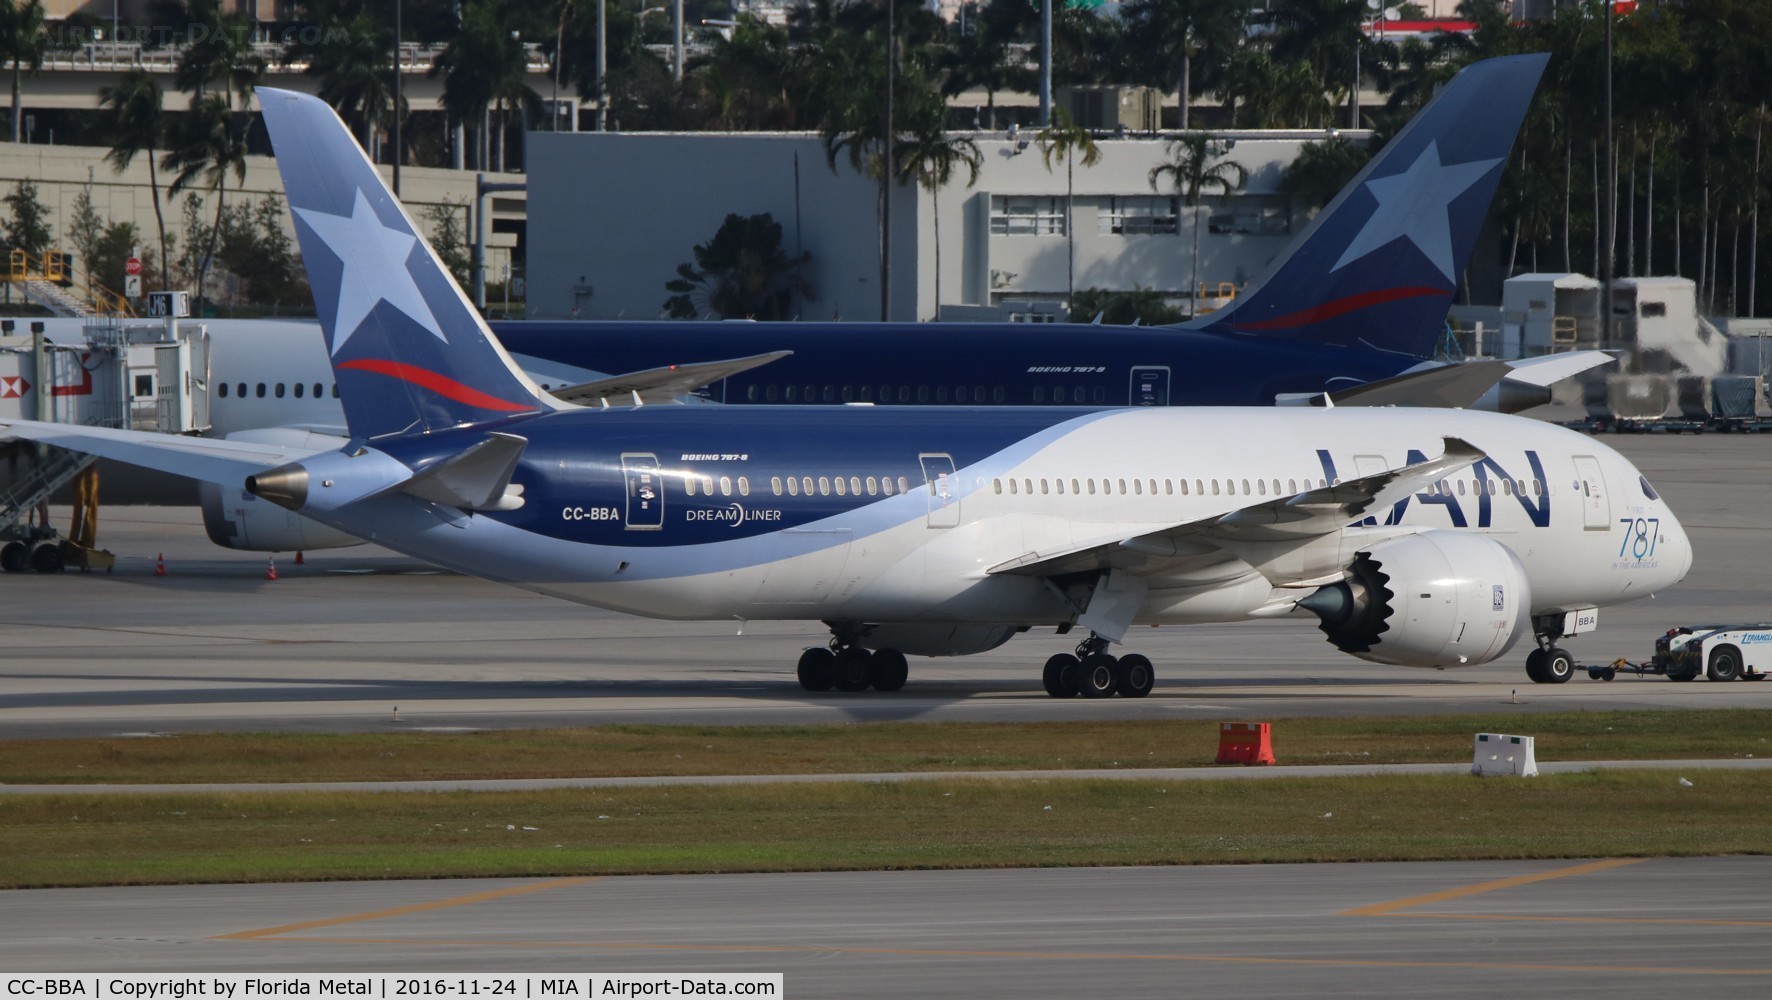 CC-BBA, 2012 Boeing 787-8 Dreamliner C/N 38471, LAN 787-8